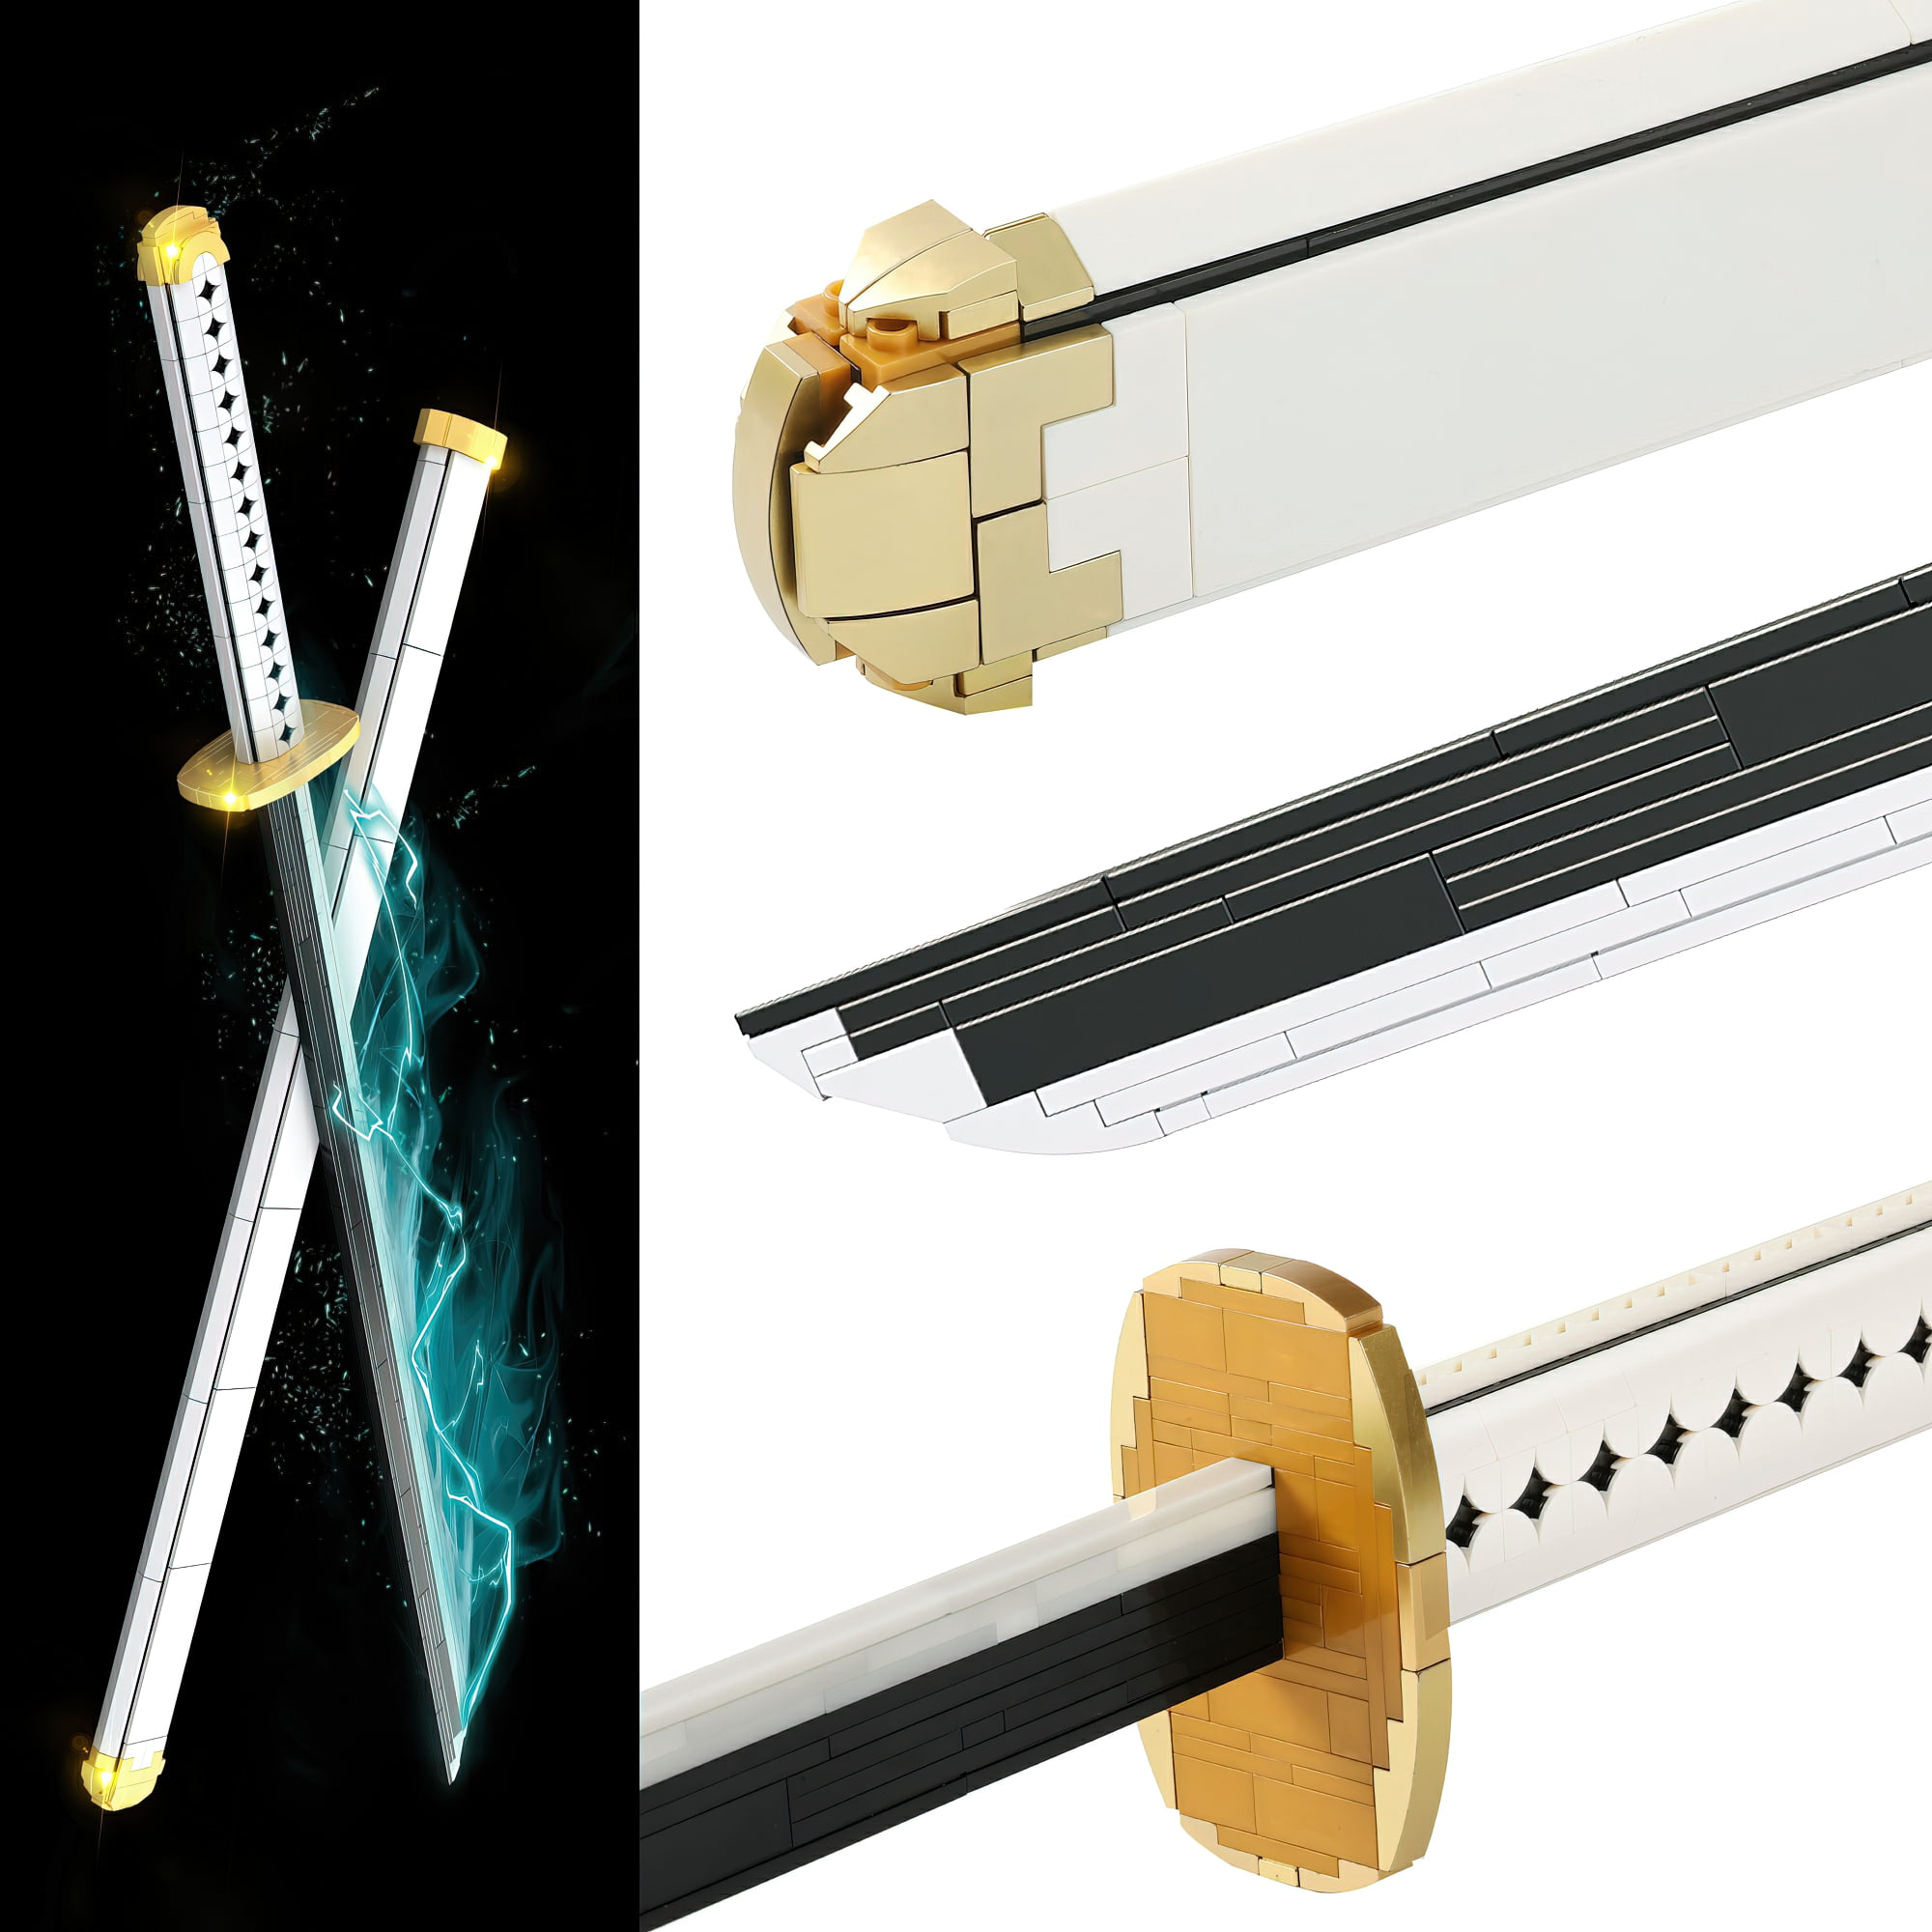 FDEYES 1319 Pieces Whitebeard Sword Building Block Toys, 122.4 cm Cosplay  Anime Swords Assembly Toy, Handmade Katana Samurai Knife Model for Fans